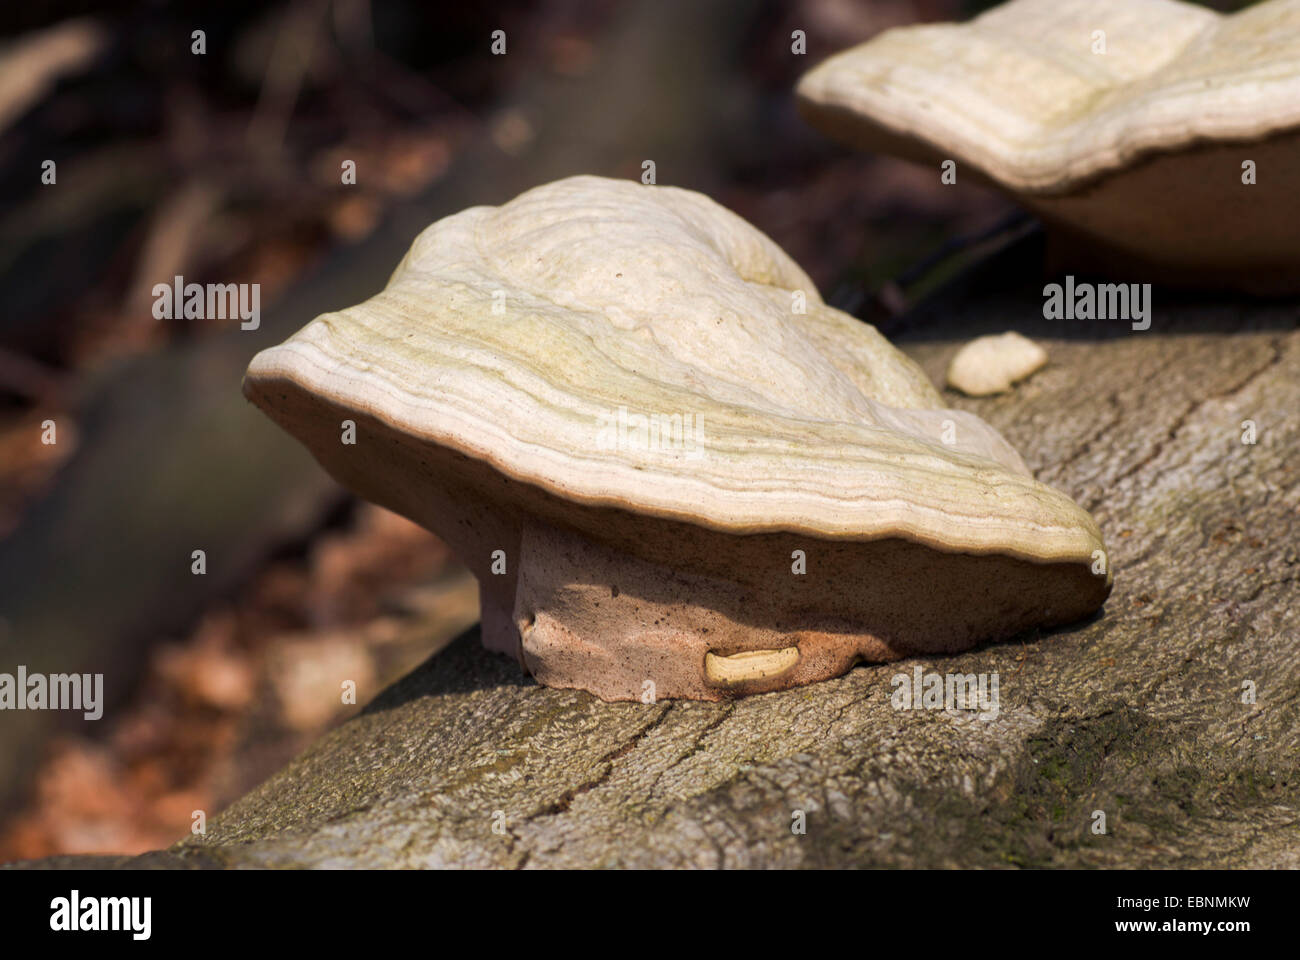 hoof fungus, tinder bracket (Fomes fomentarius), on deadwood, Germany Stock Photo